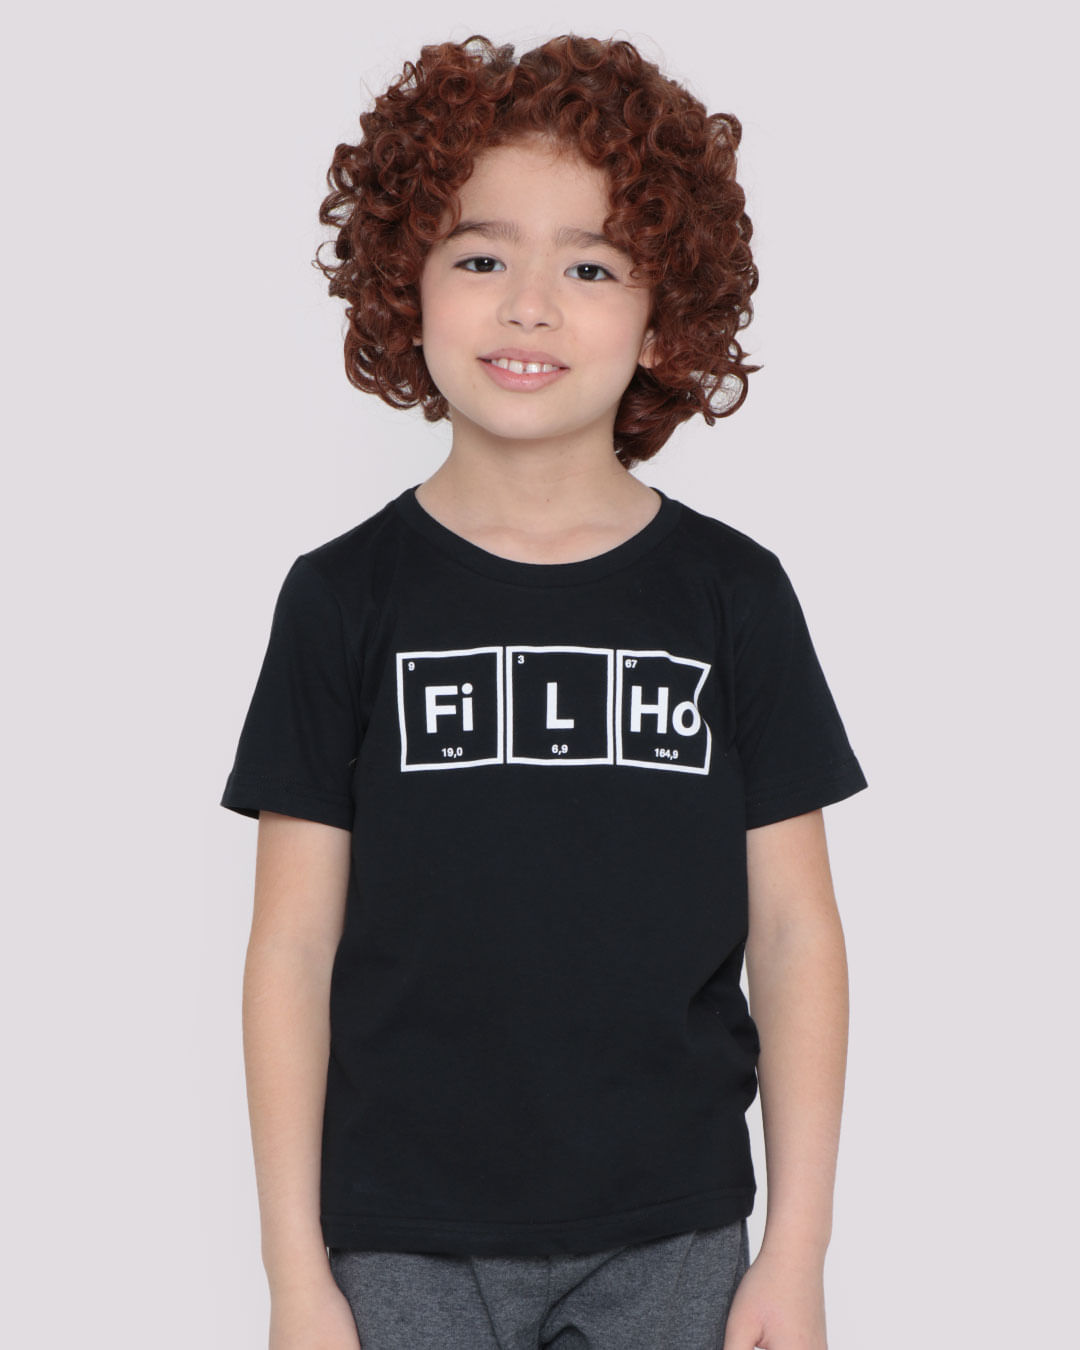 Camiseta-Infantil-Filho-Preta